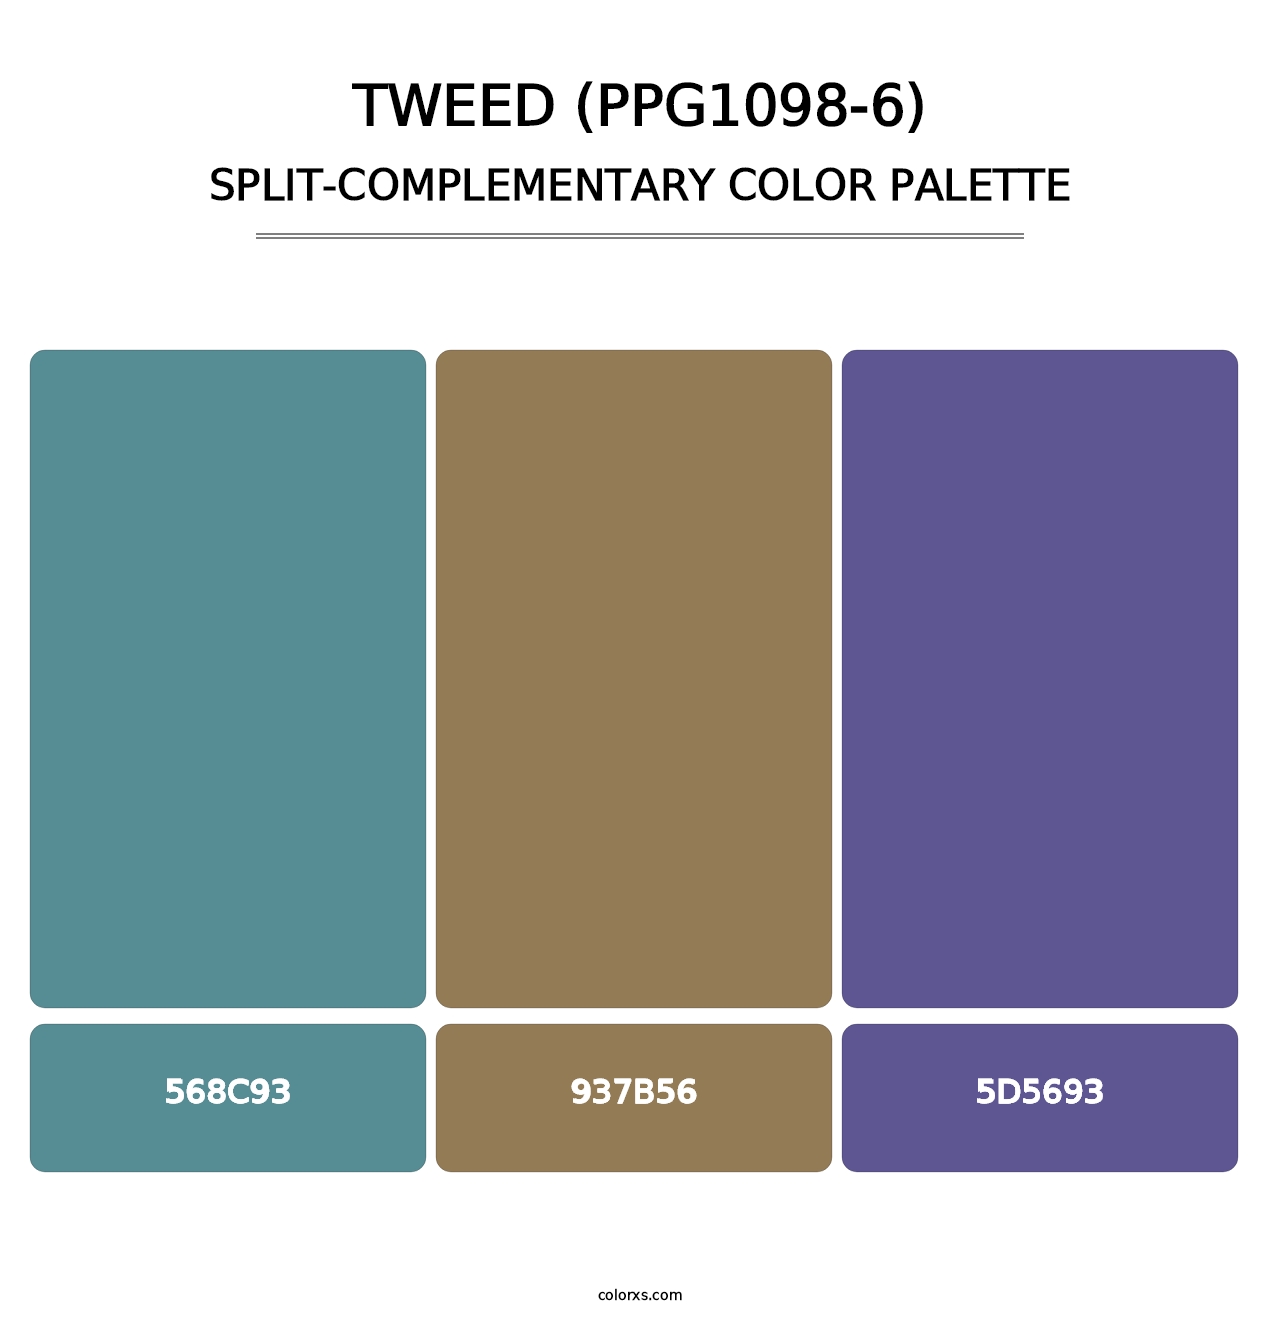 Tweed (PPG1098-6) - Split-Complementary Color Palette